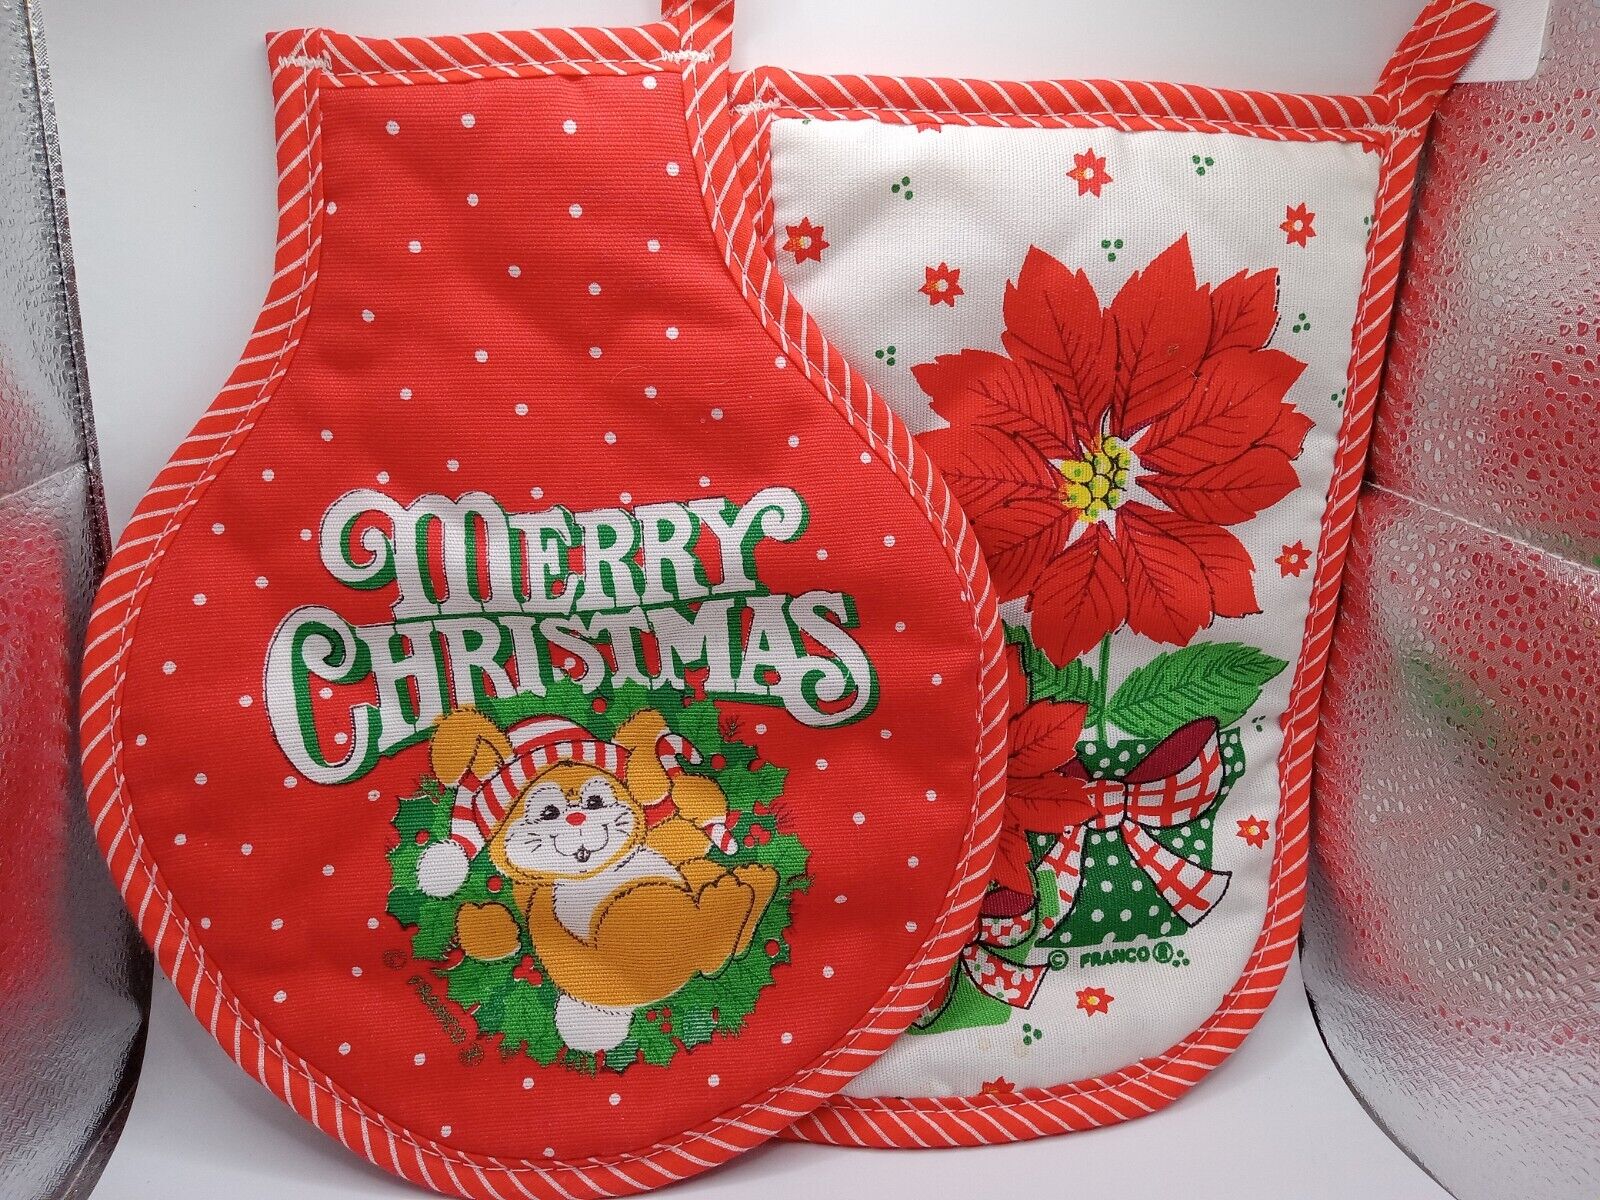 2) Vintage Franco Merry Christmas Pot Holders 9.75” x 8.25” EUC Dinner Warmers